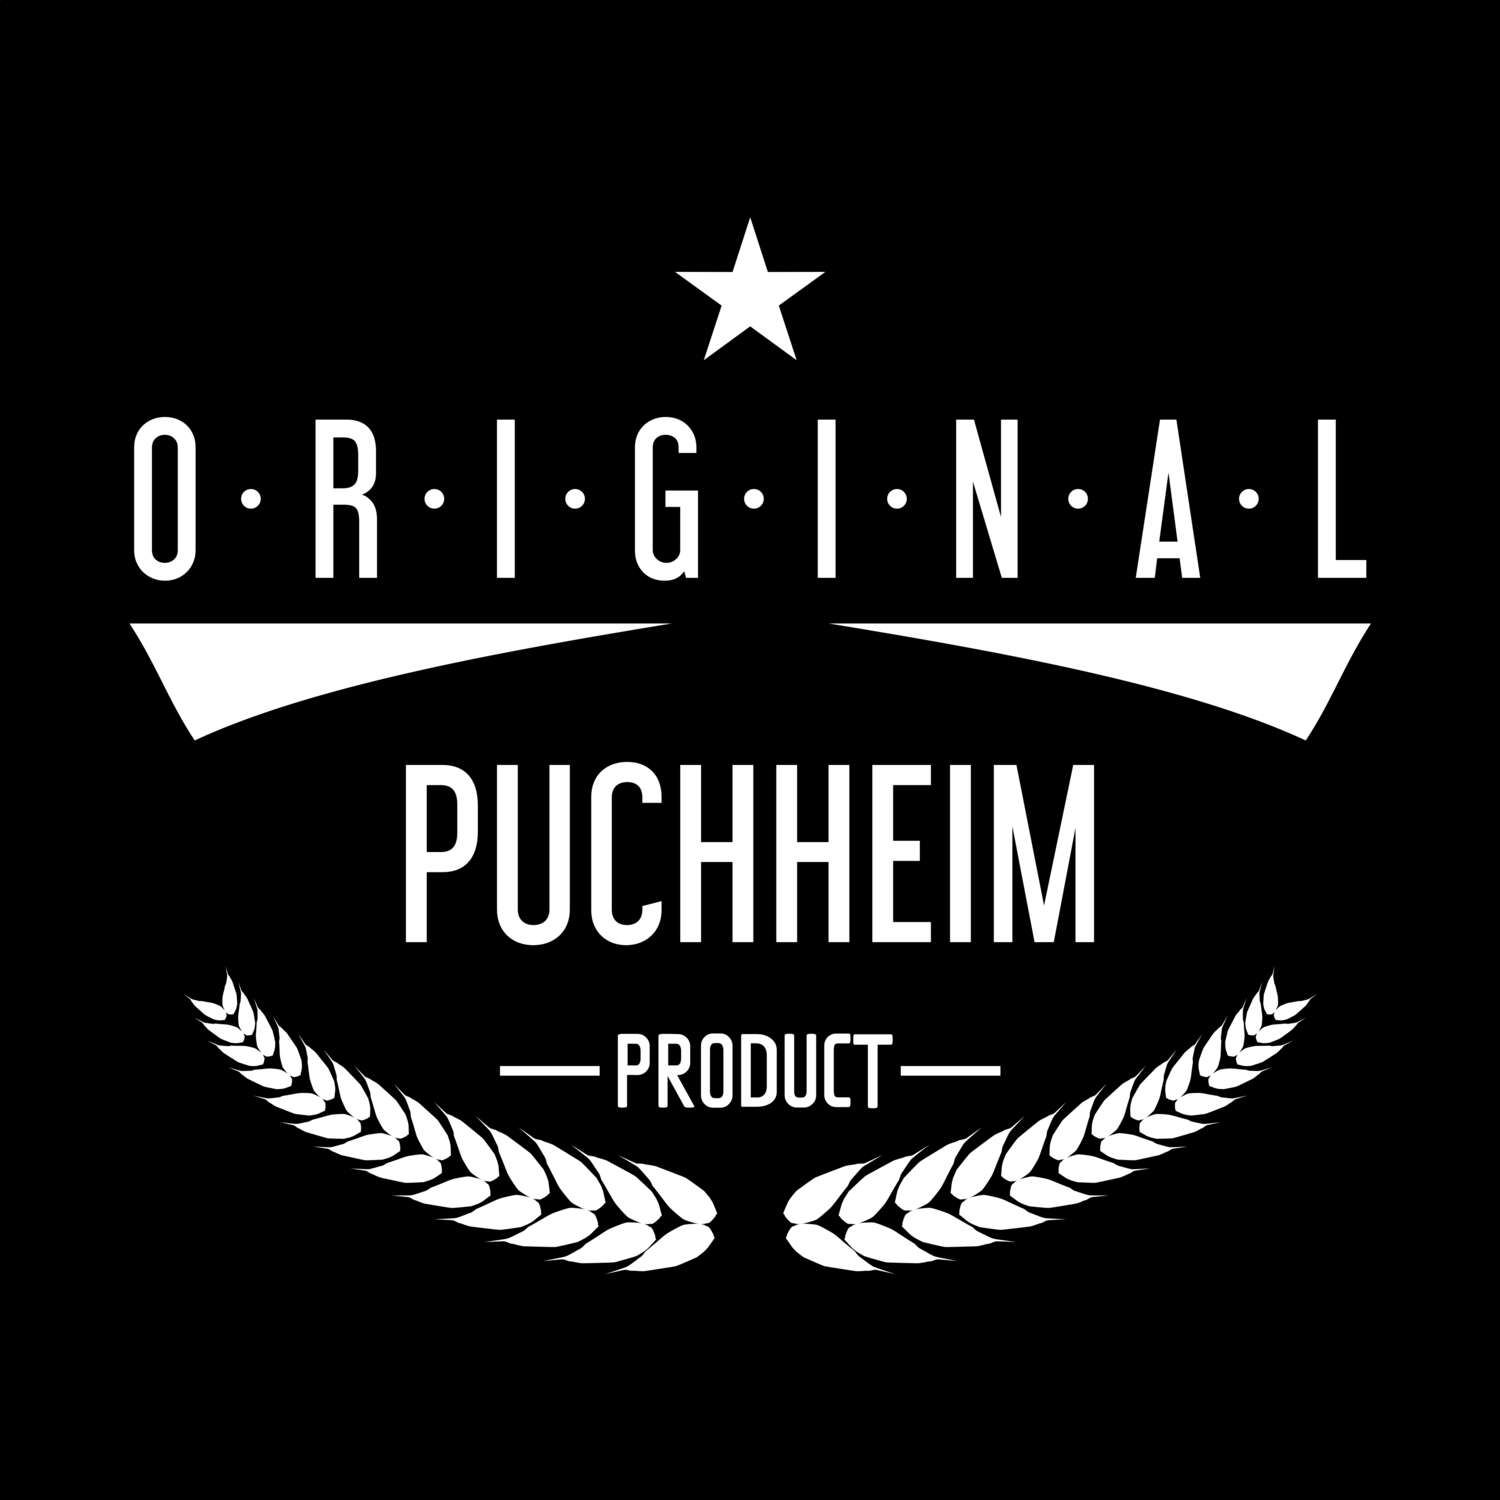 Puchheim T-Shirt »Original Product«